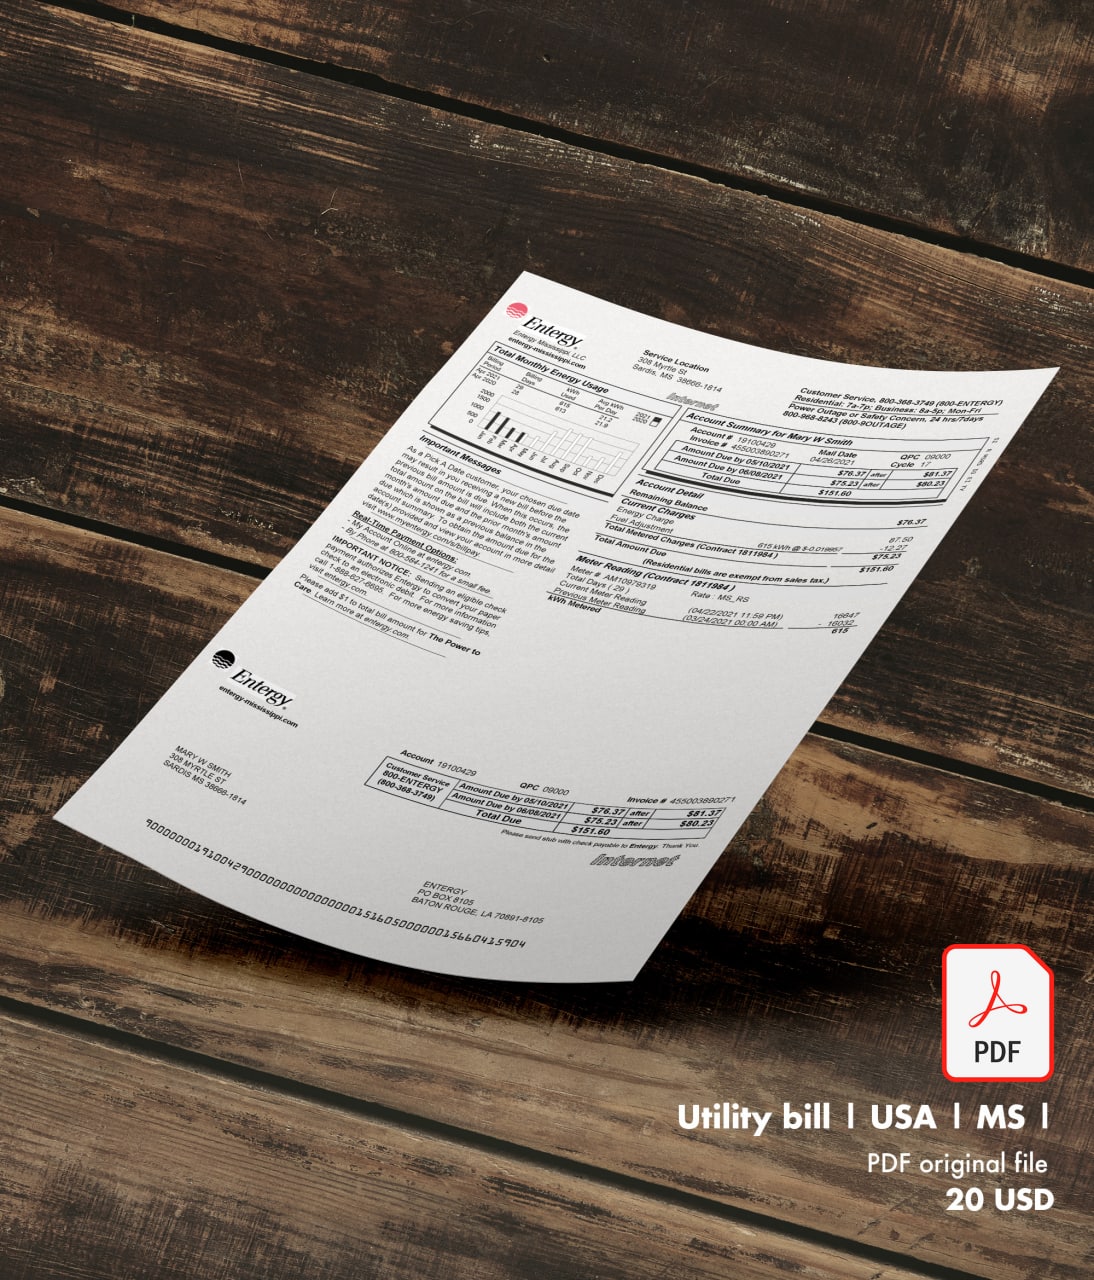 Utility bill | Entergy | USA | MS1